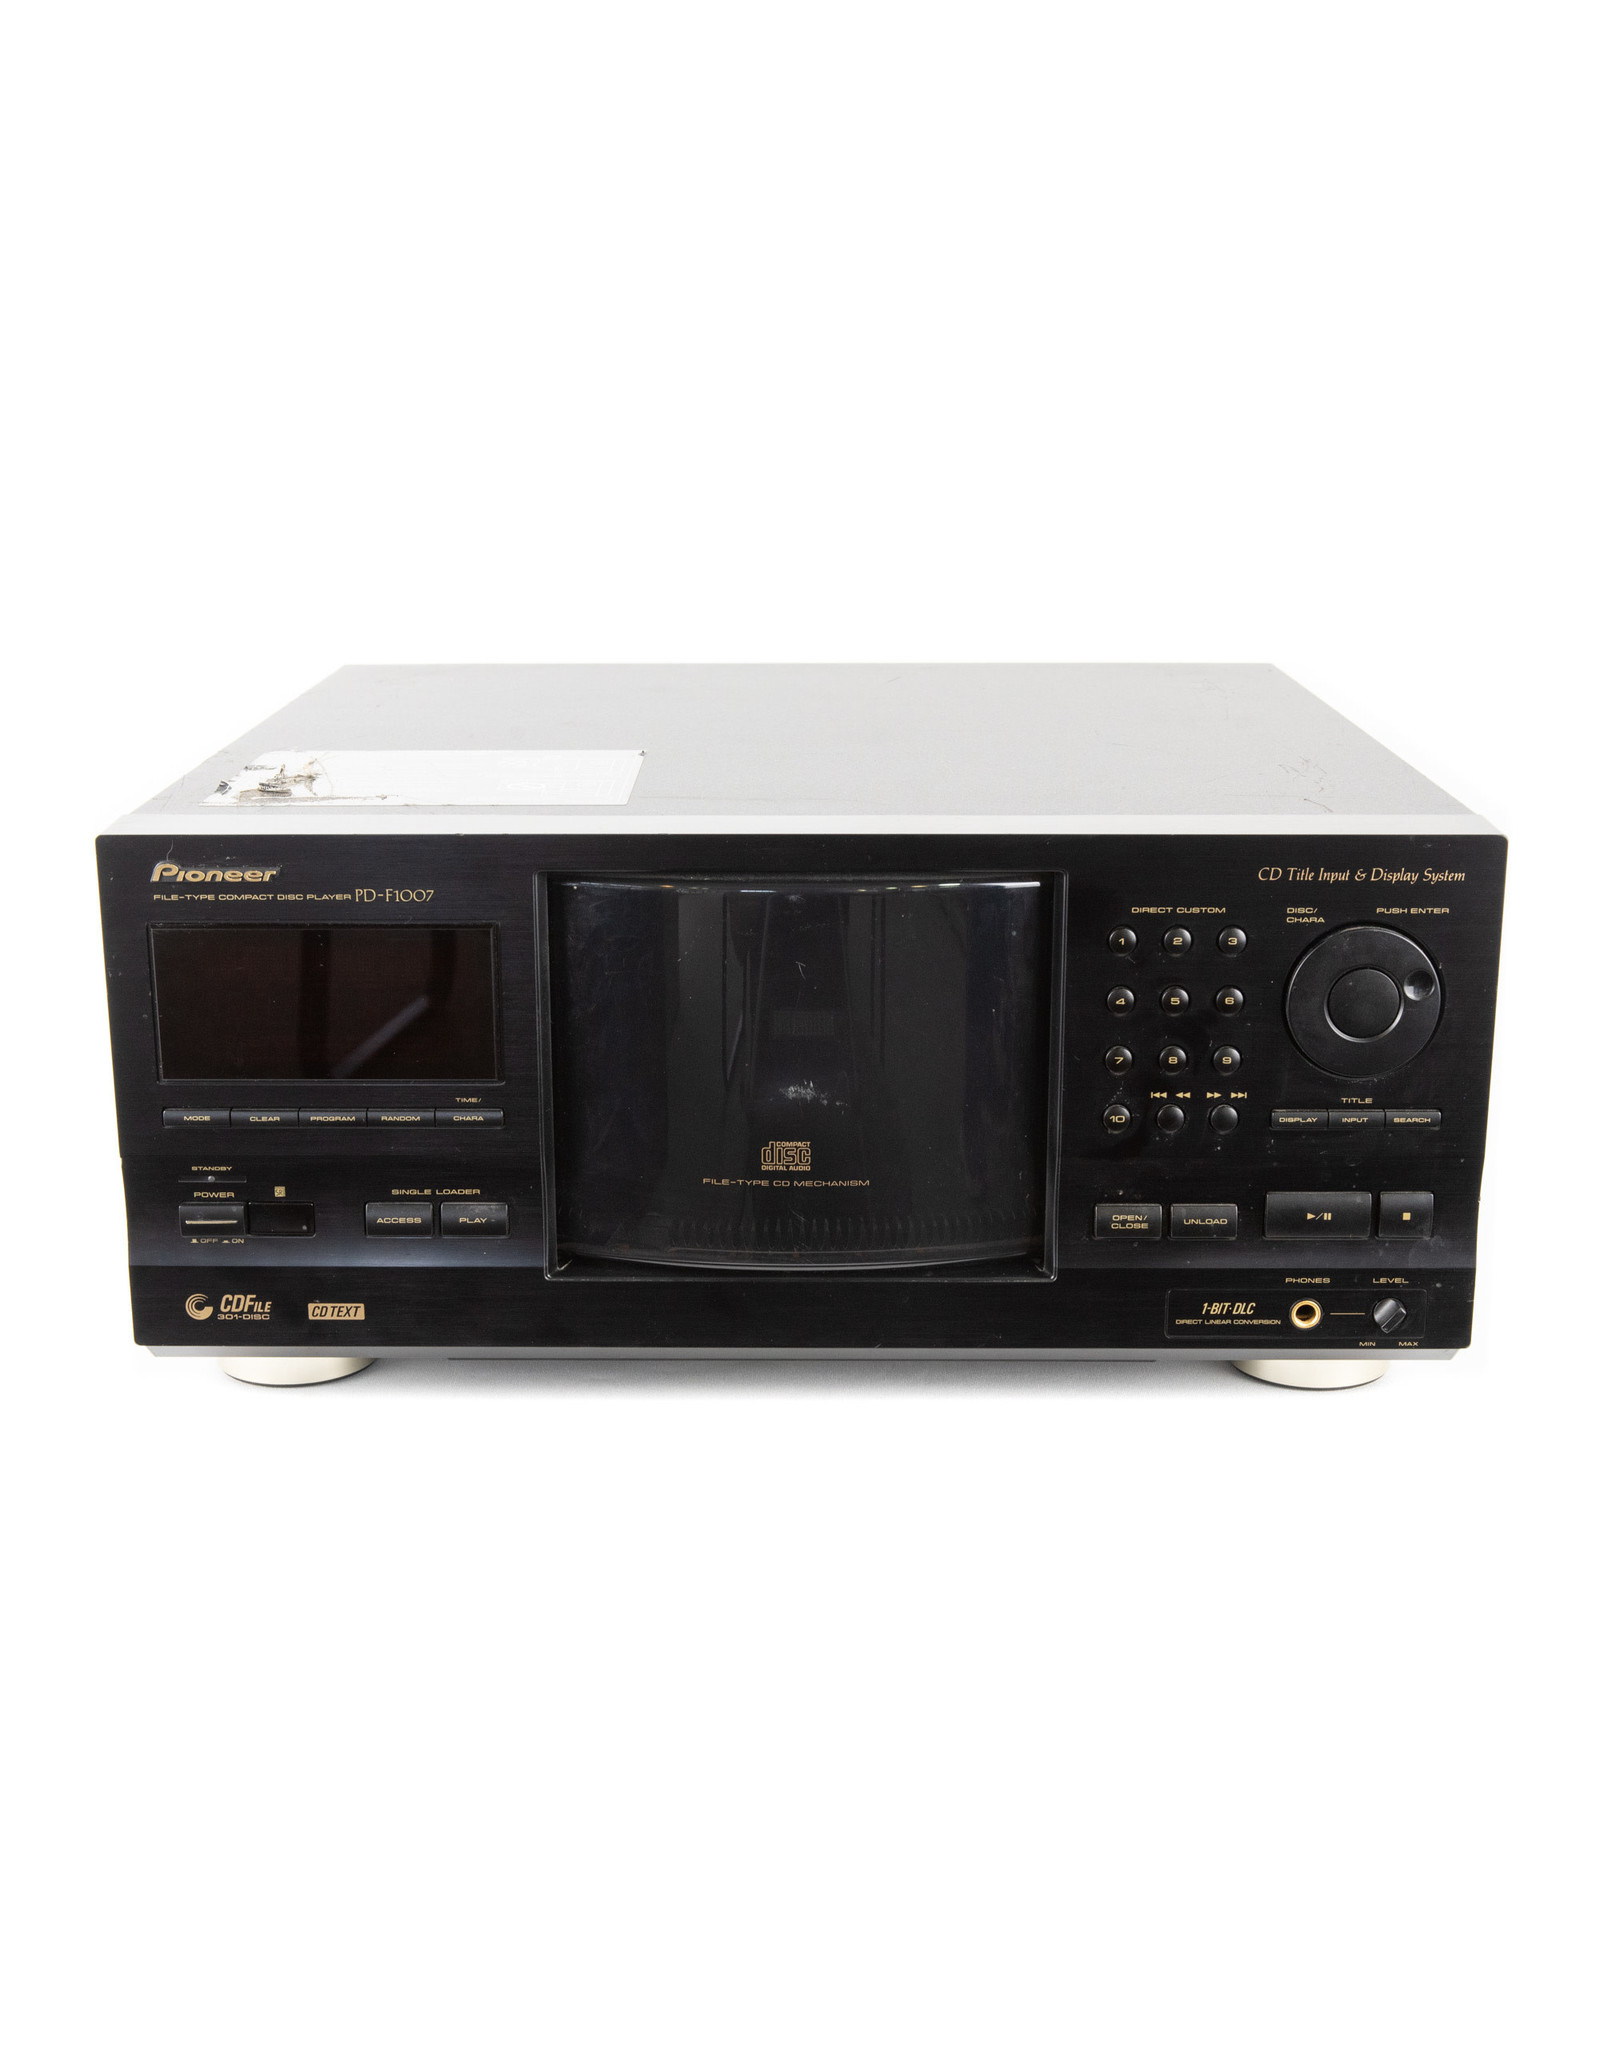 Pioneer Pioneer PD-F1007 300-Disc CD Player USED